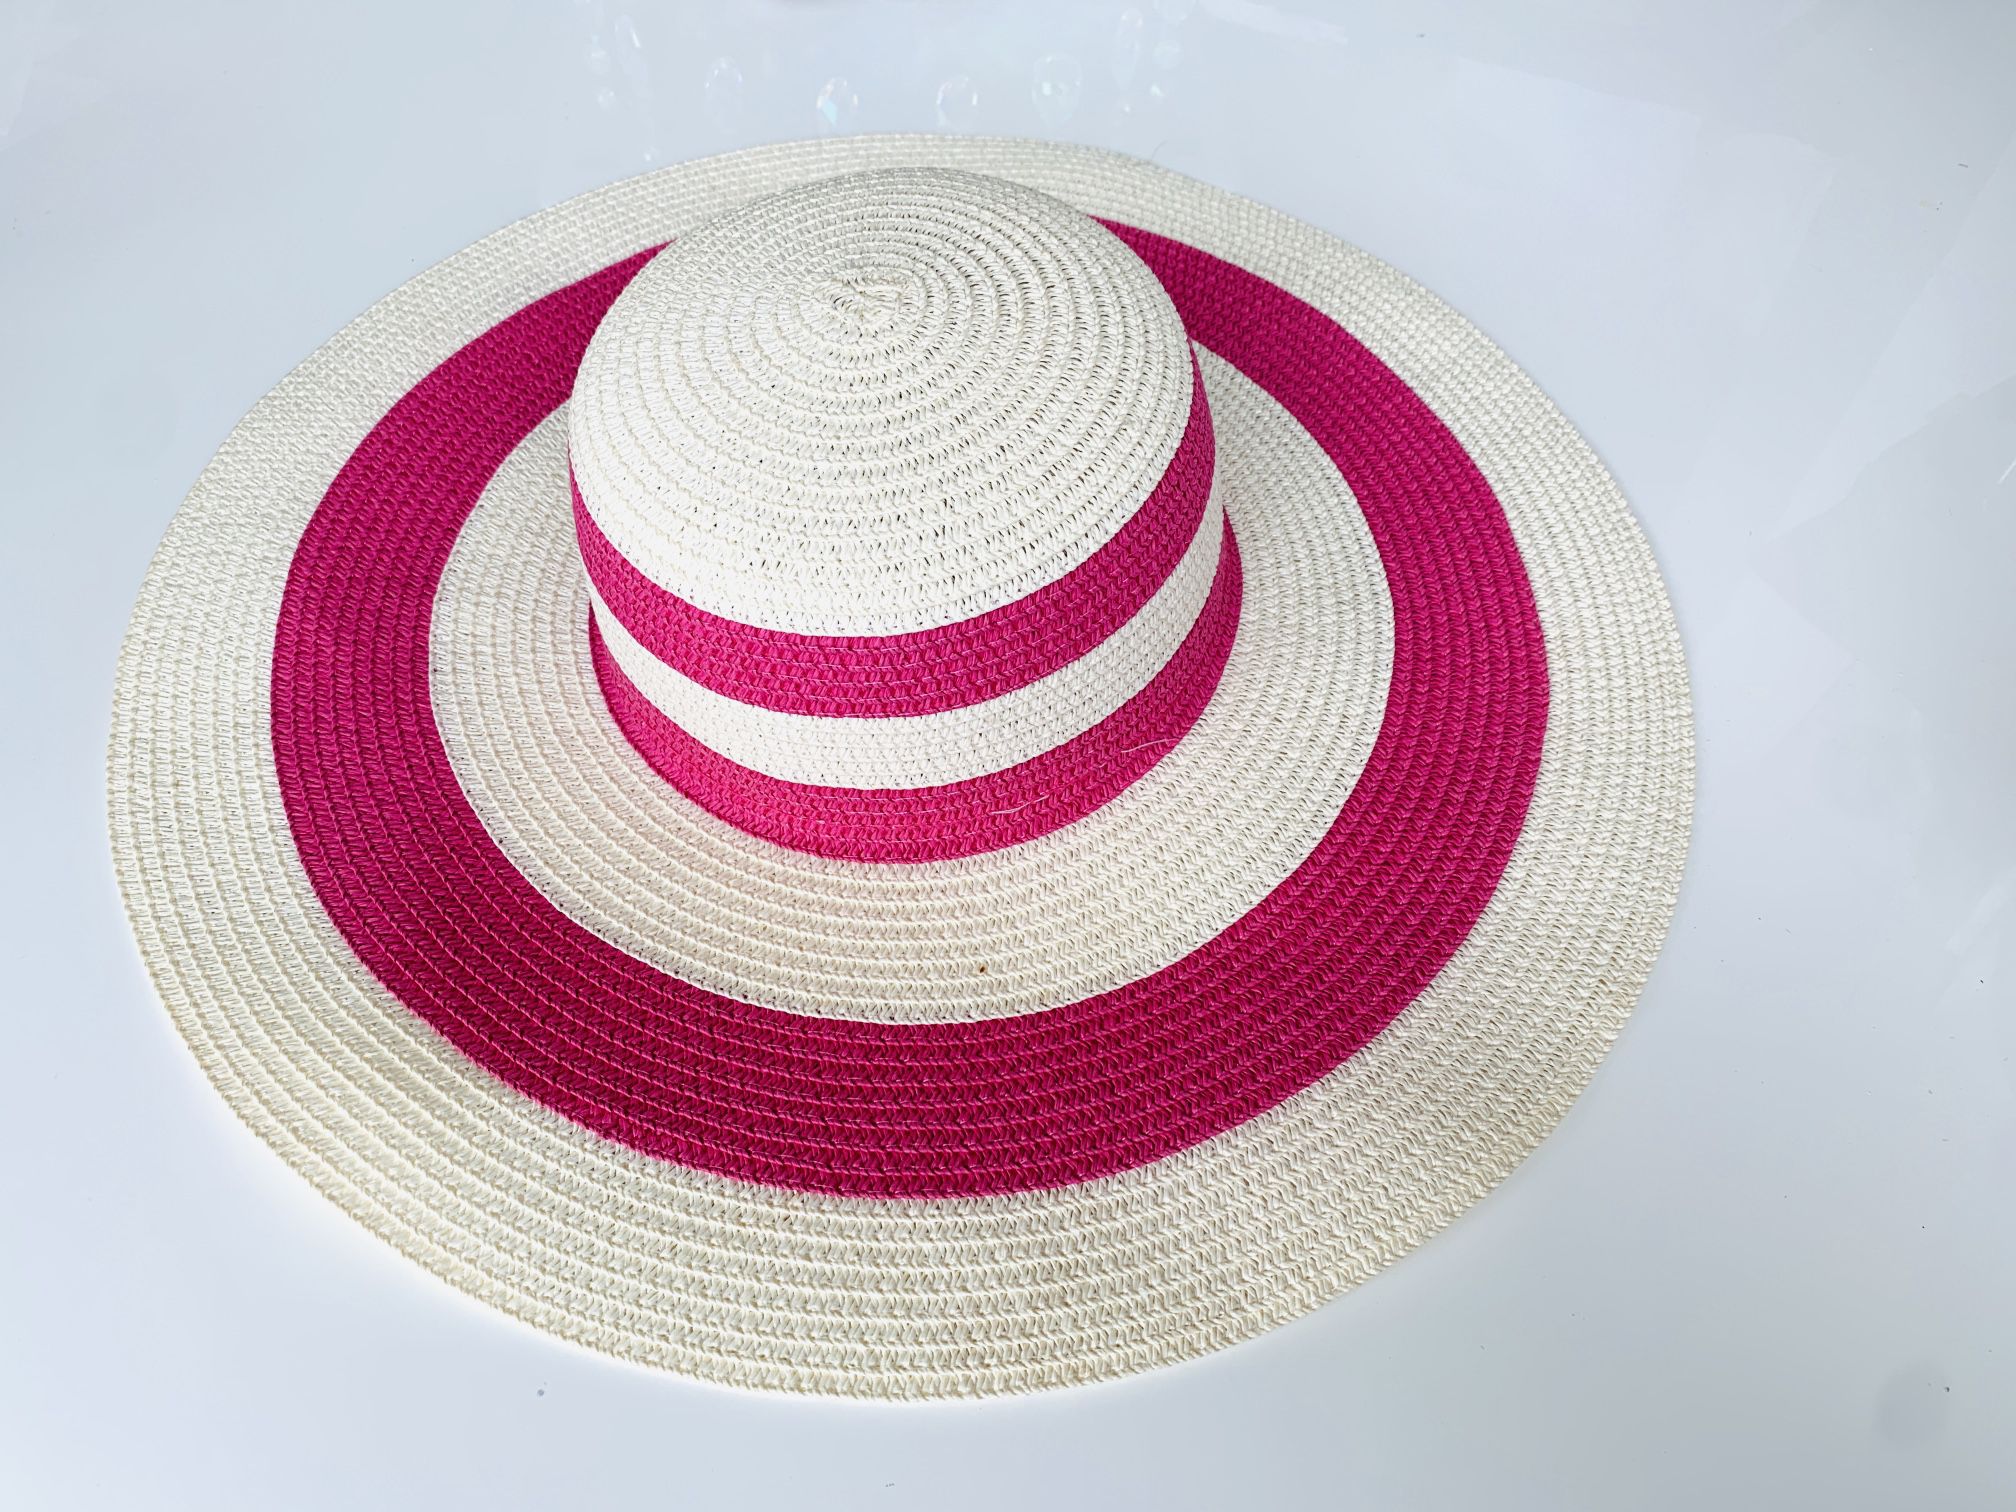 Like New Large Hot Pink / Fuchsia Stripped Straw Beach / Sun Hat